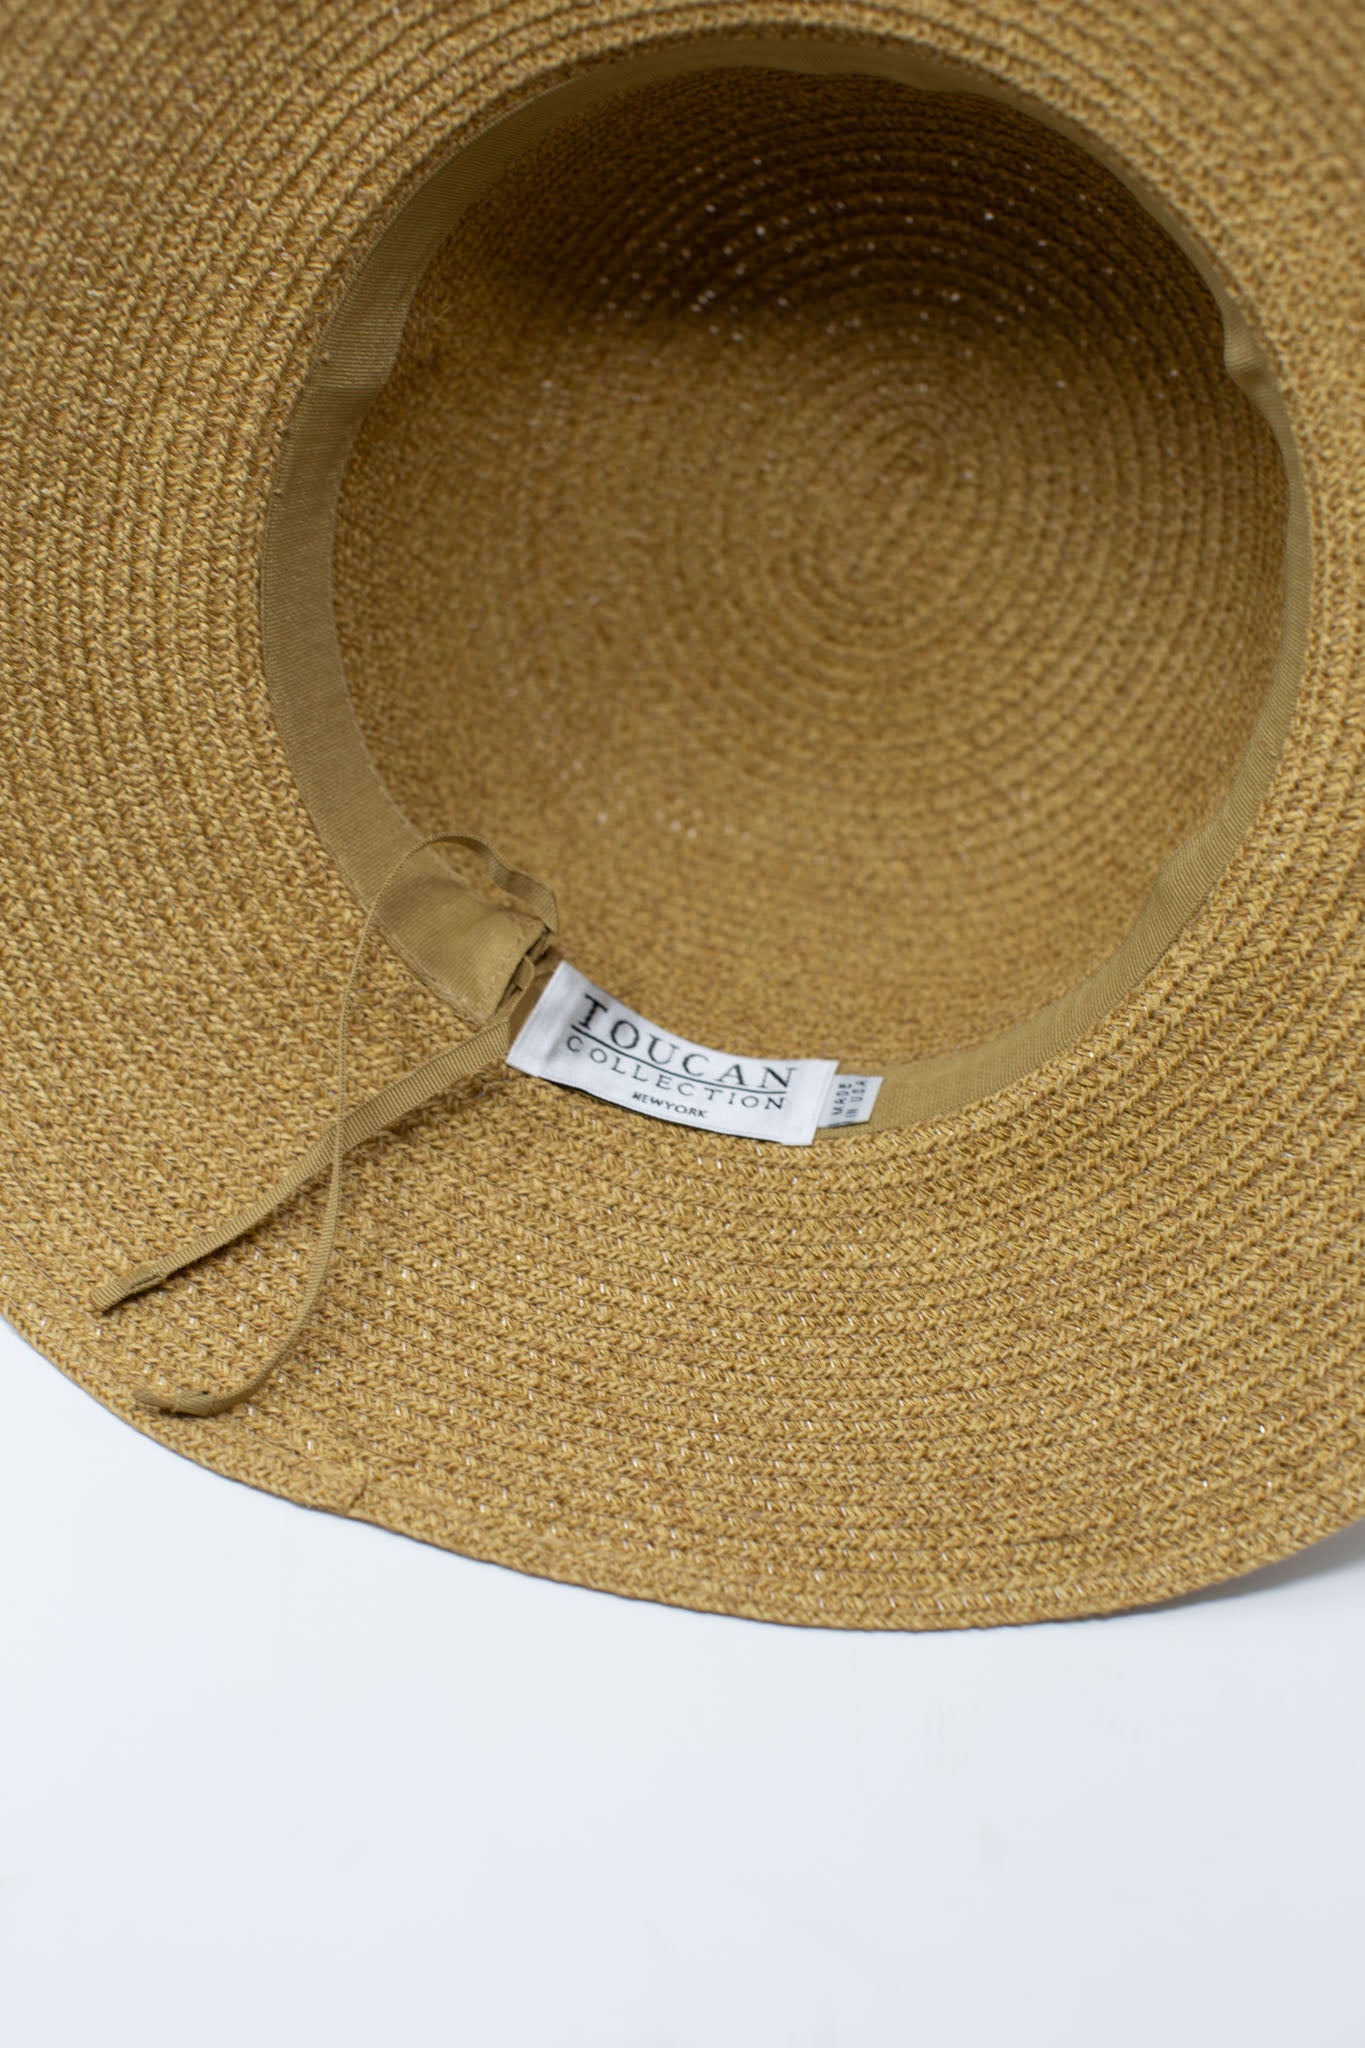 Toucan Collection Cloche Sun Hat (Black)